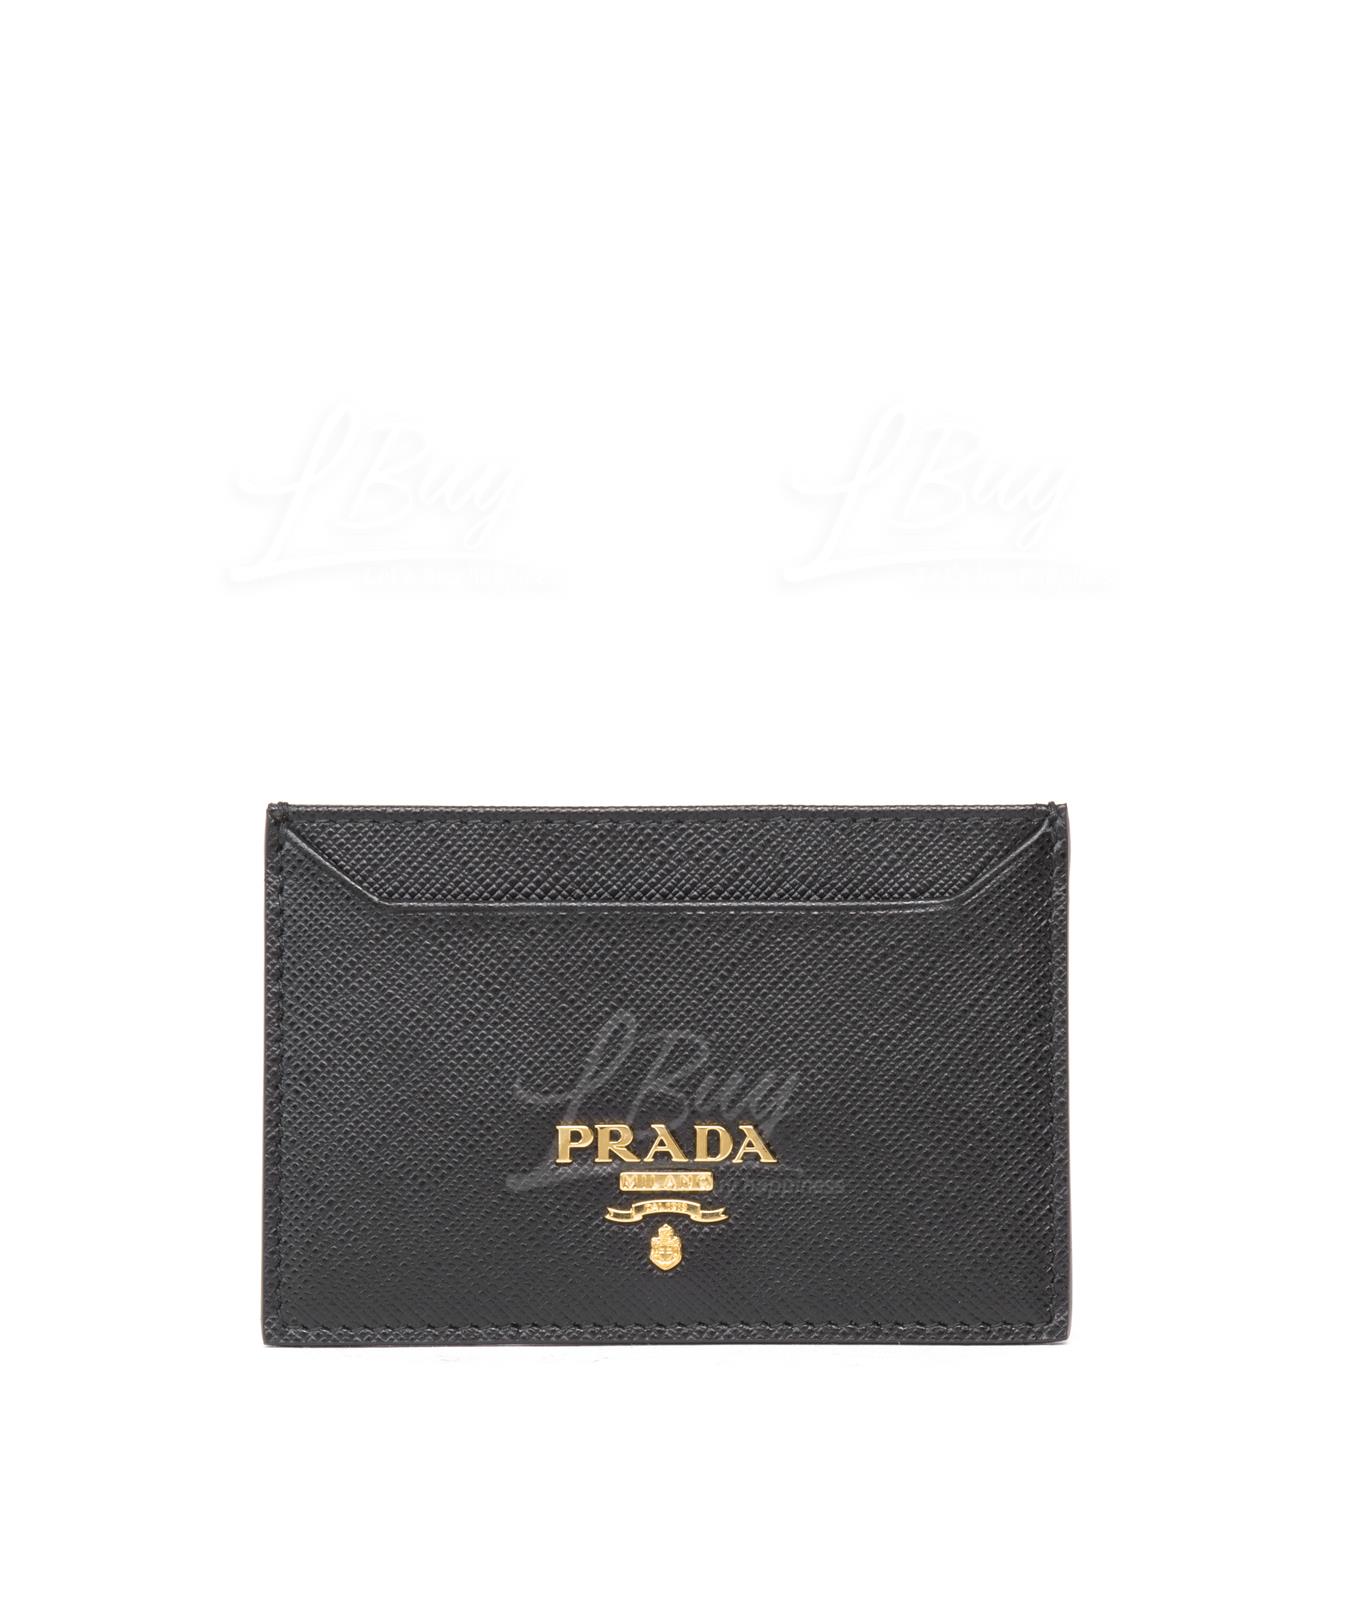 prada credit card case